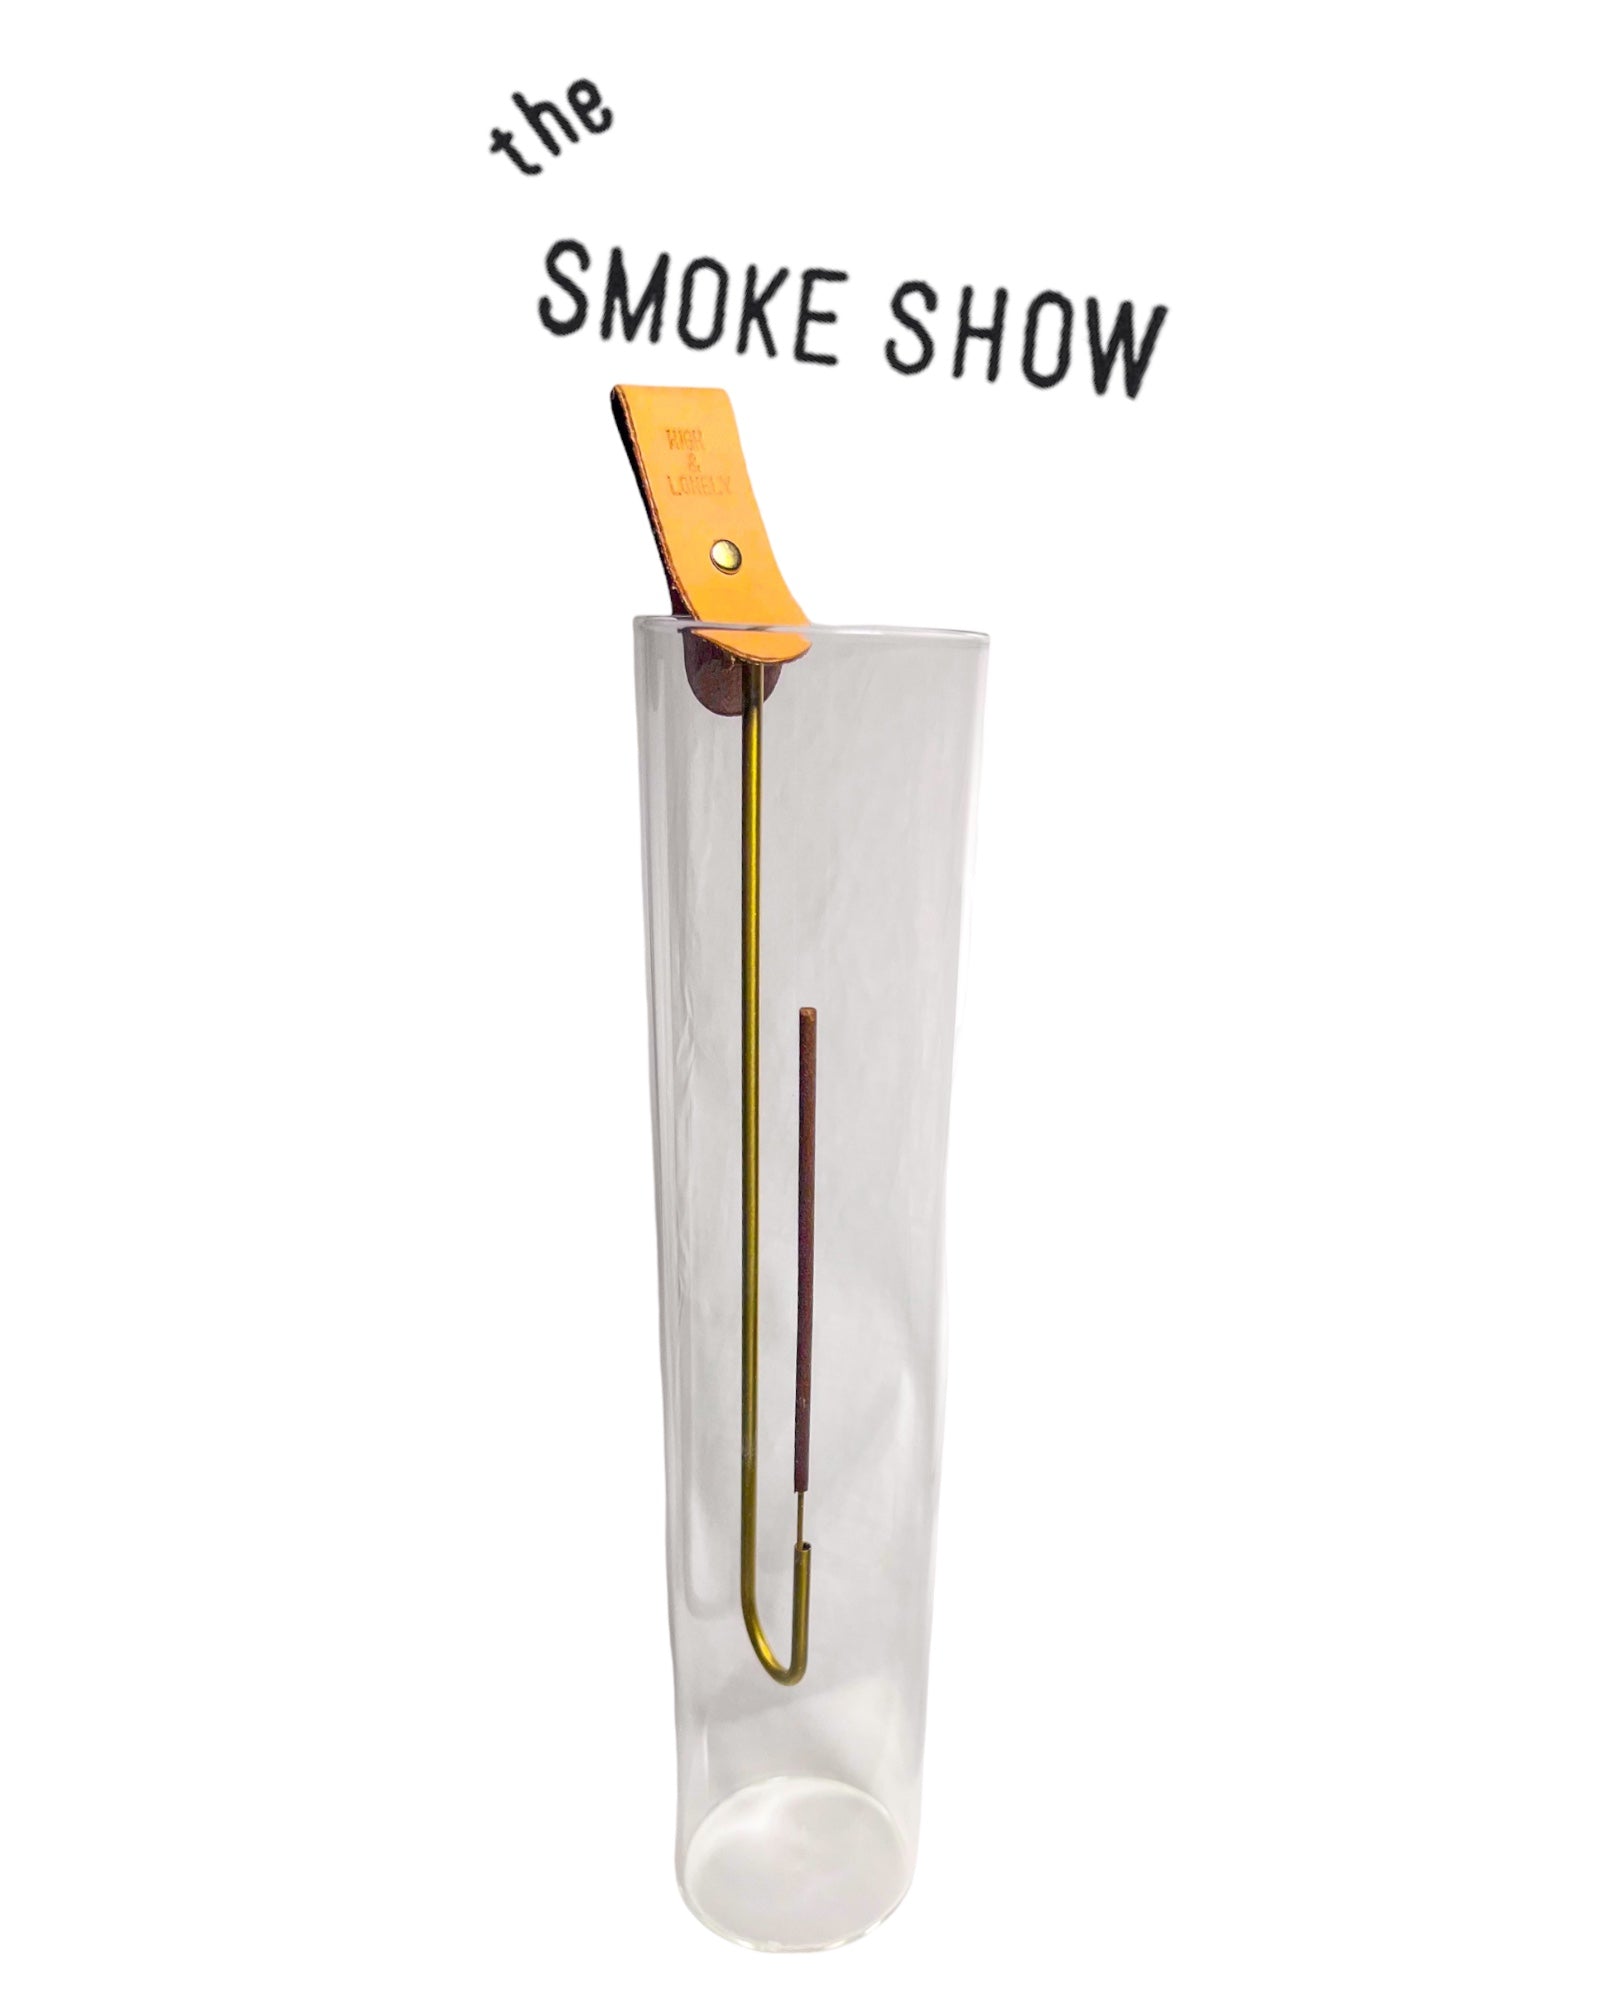 The "Smoke Show" Glass Holder